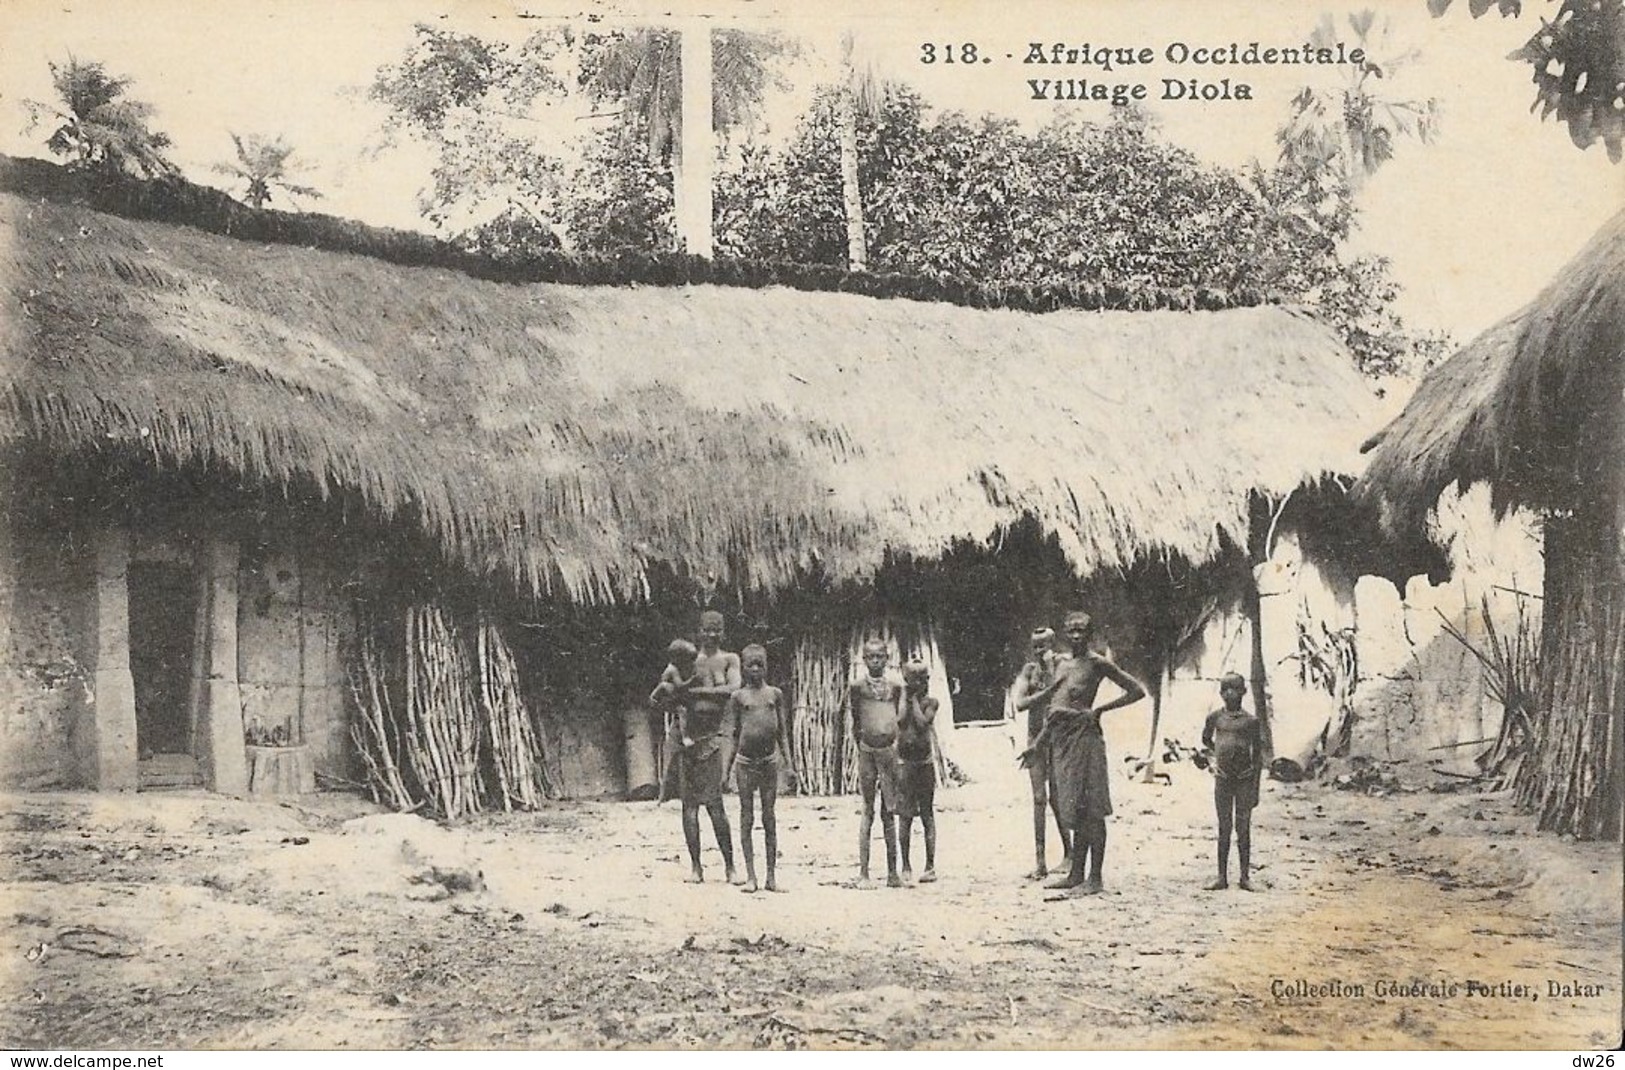 Afrique Occidentale Française - Village Diola, Cases - Collection Fortier, Dakar - Carte N° 318 Non Circulée - Afrique